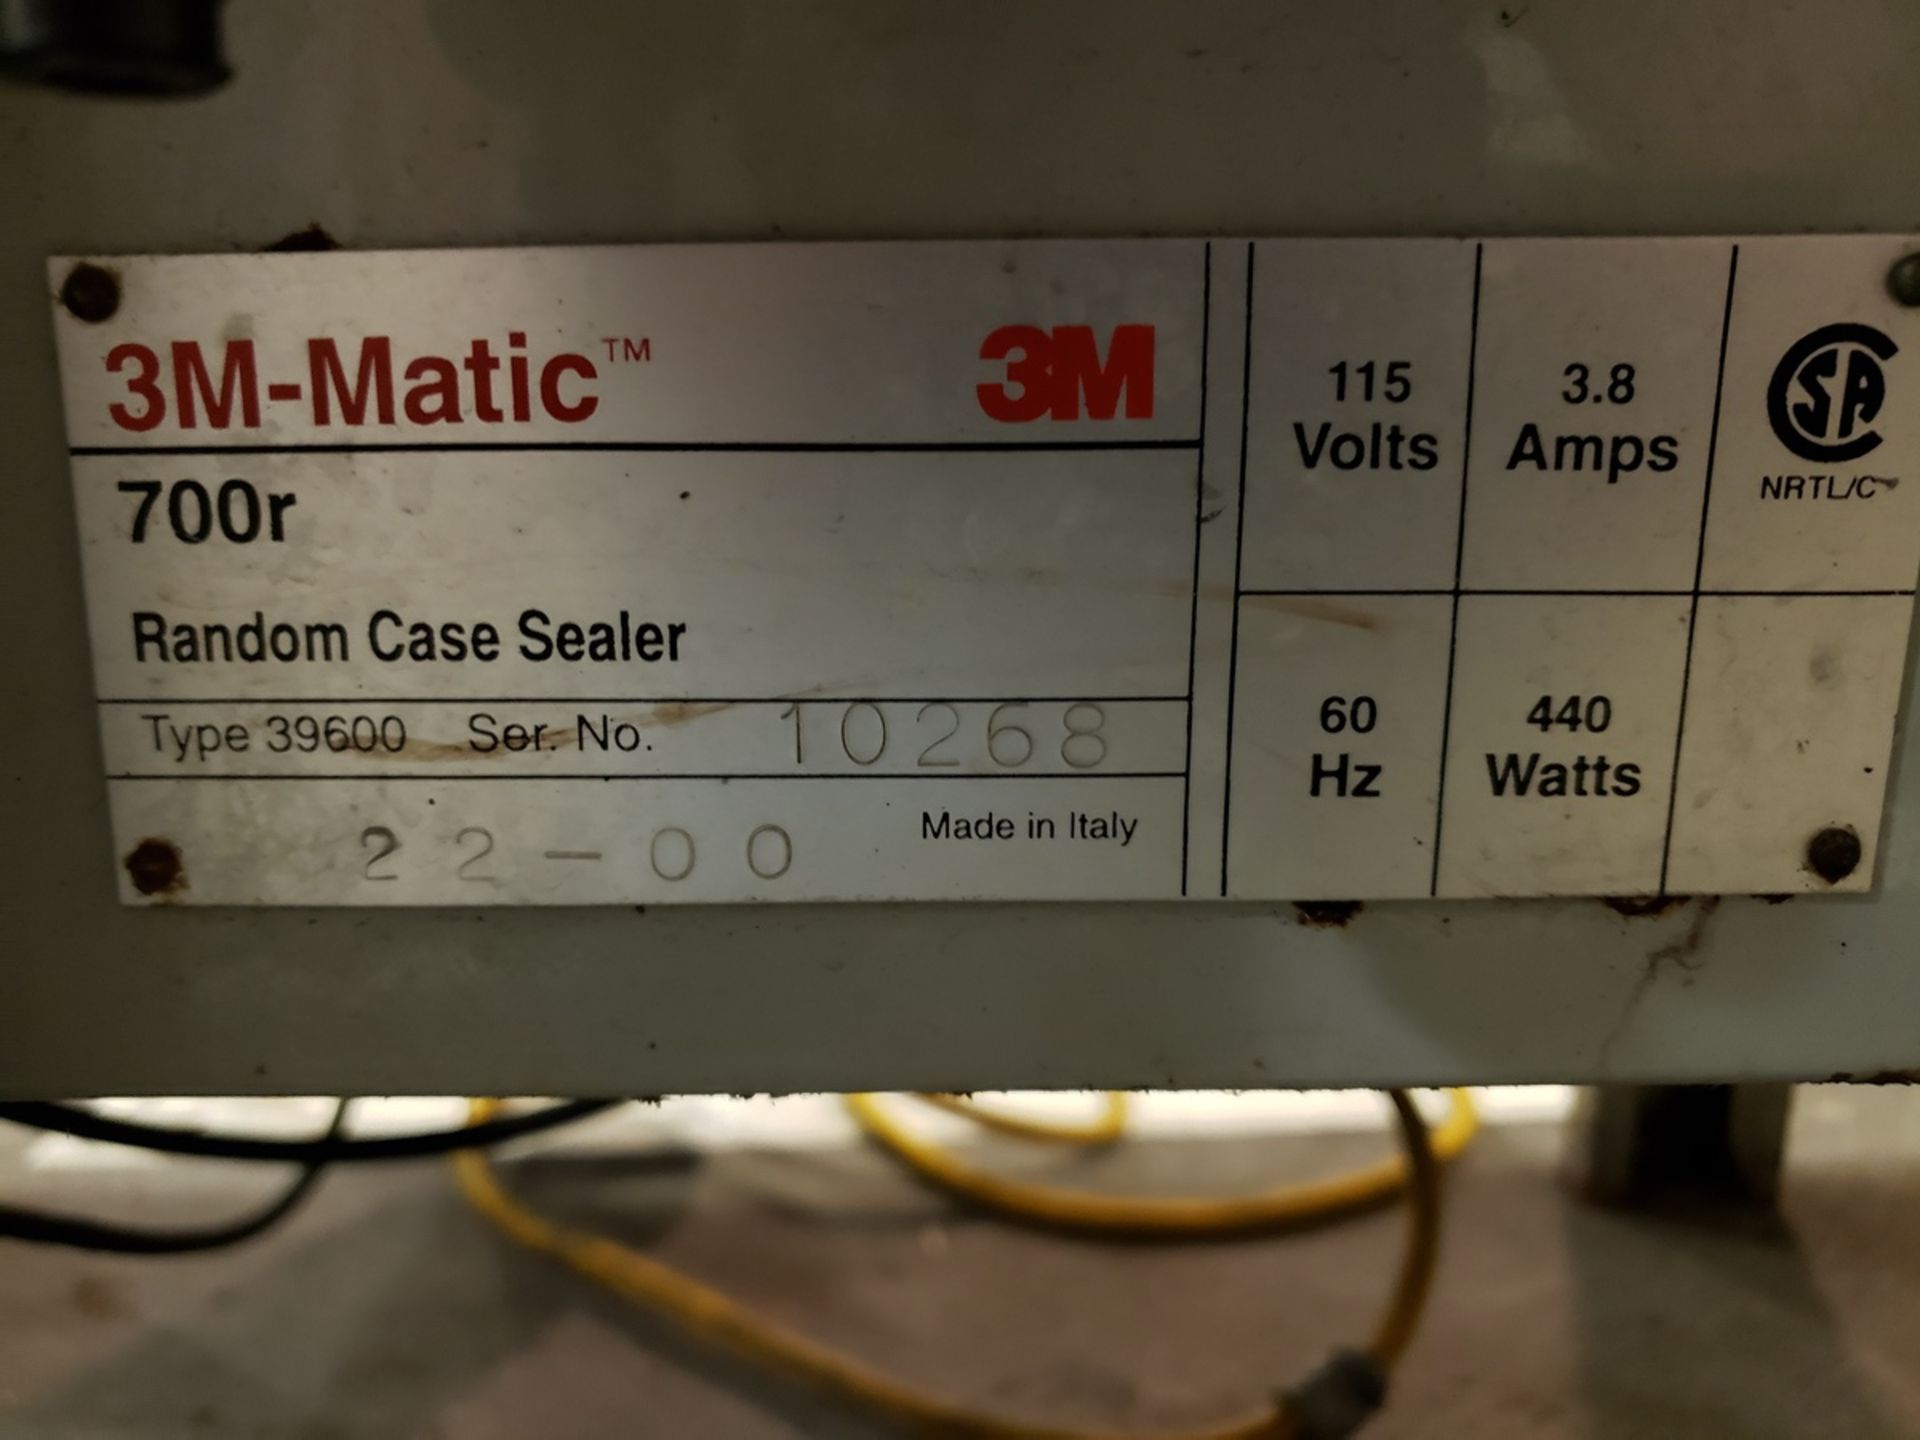 3M-Matic Case Sealer, M# 700r | Rig Fee: $100 - Image 2 of 2